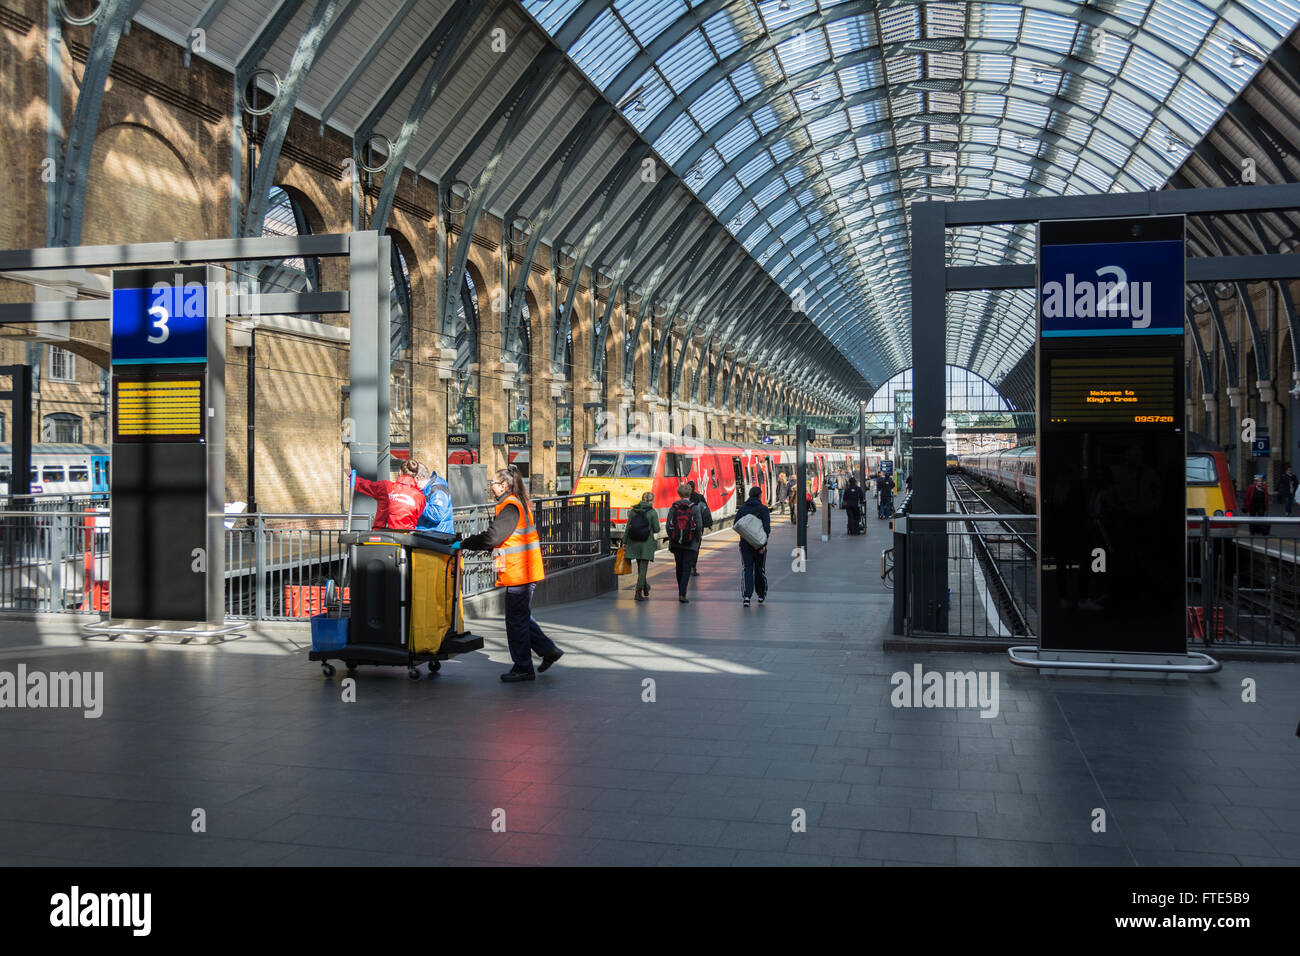 Fahrgäste im Eisenbahnverkehr Abfahrt um Kings Cross Bahnhof, London UK Stockfoto